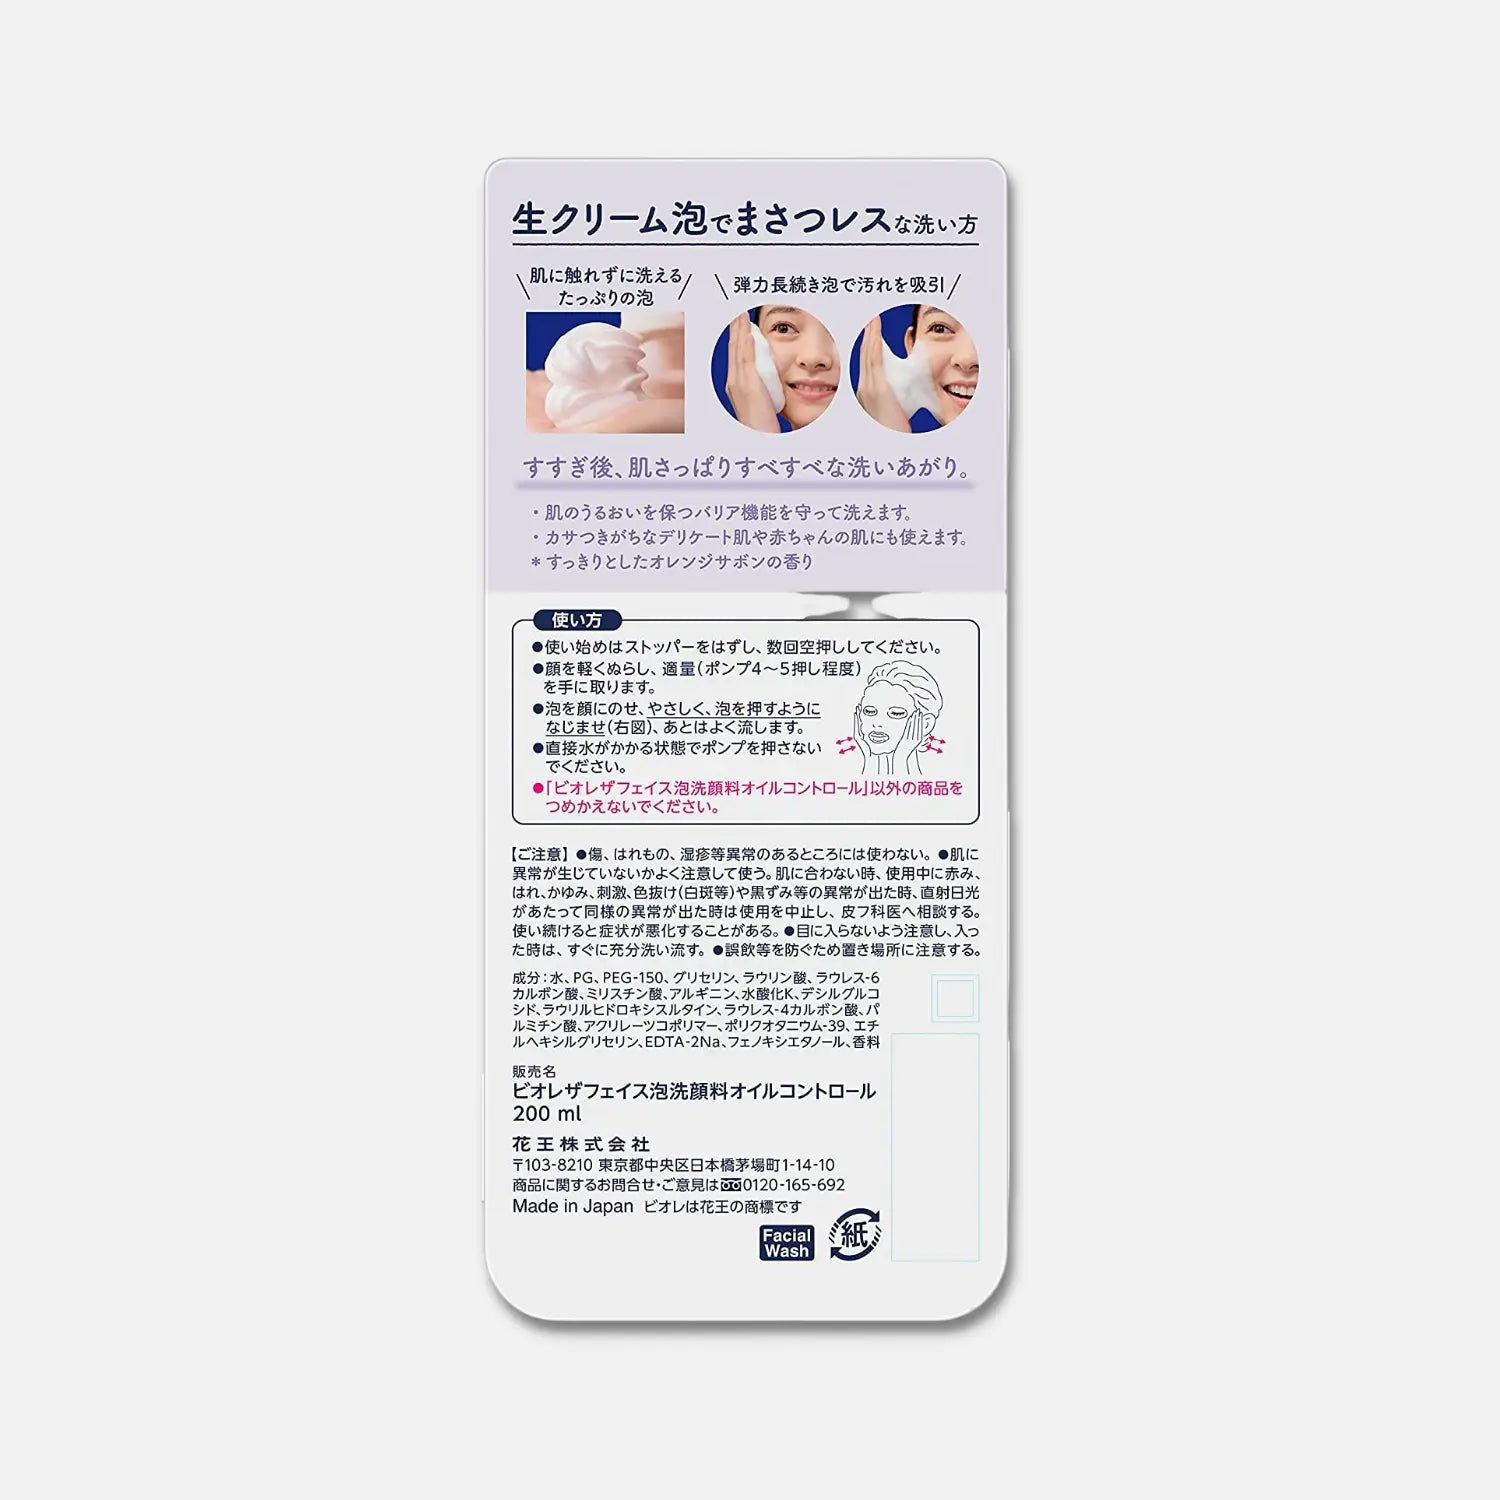 Biore The Face Oil Control Foam Facial Cleanser 200ml - Buy Me Japan